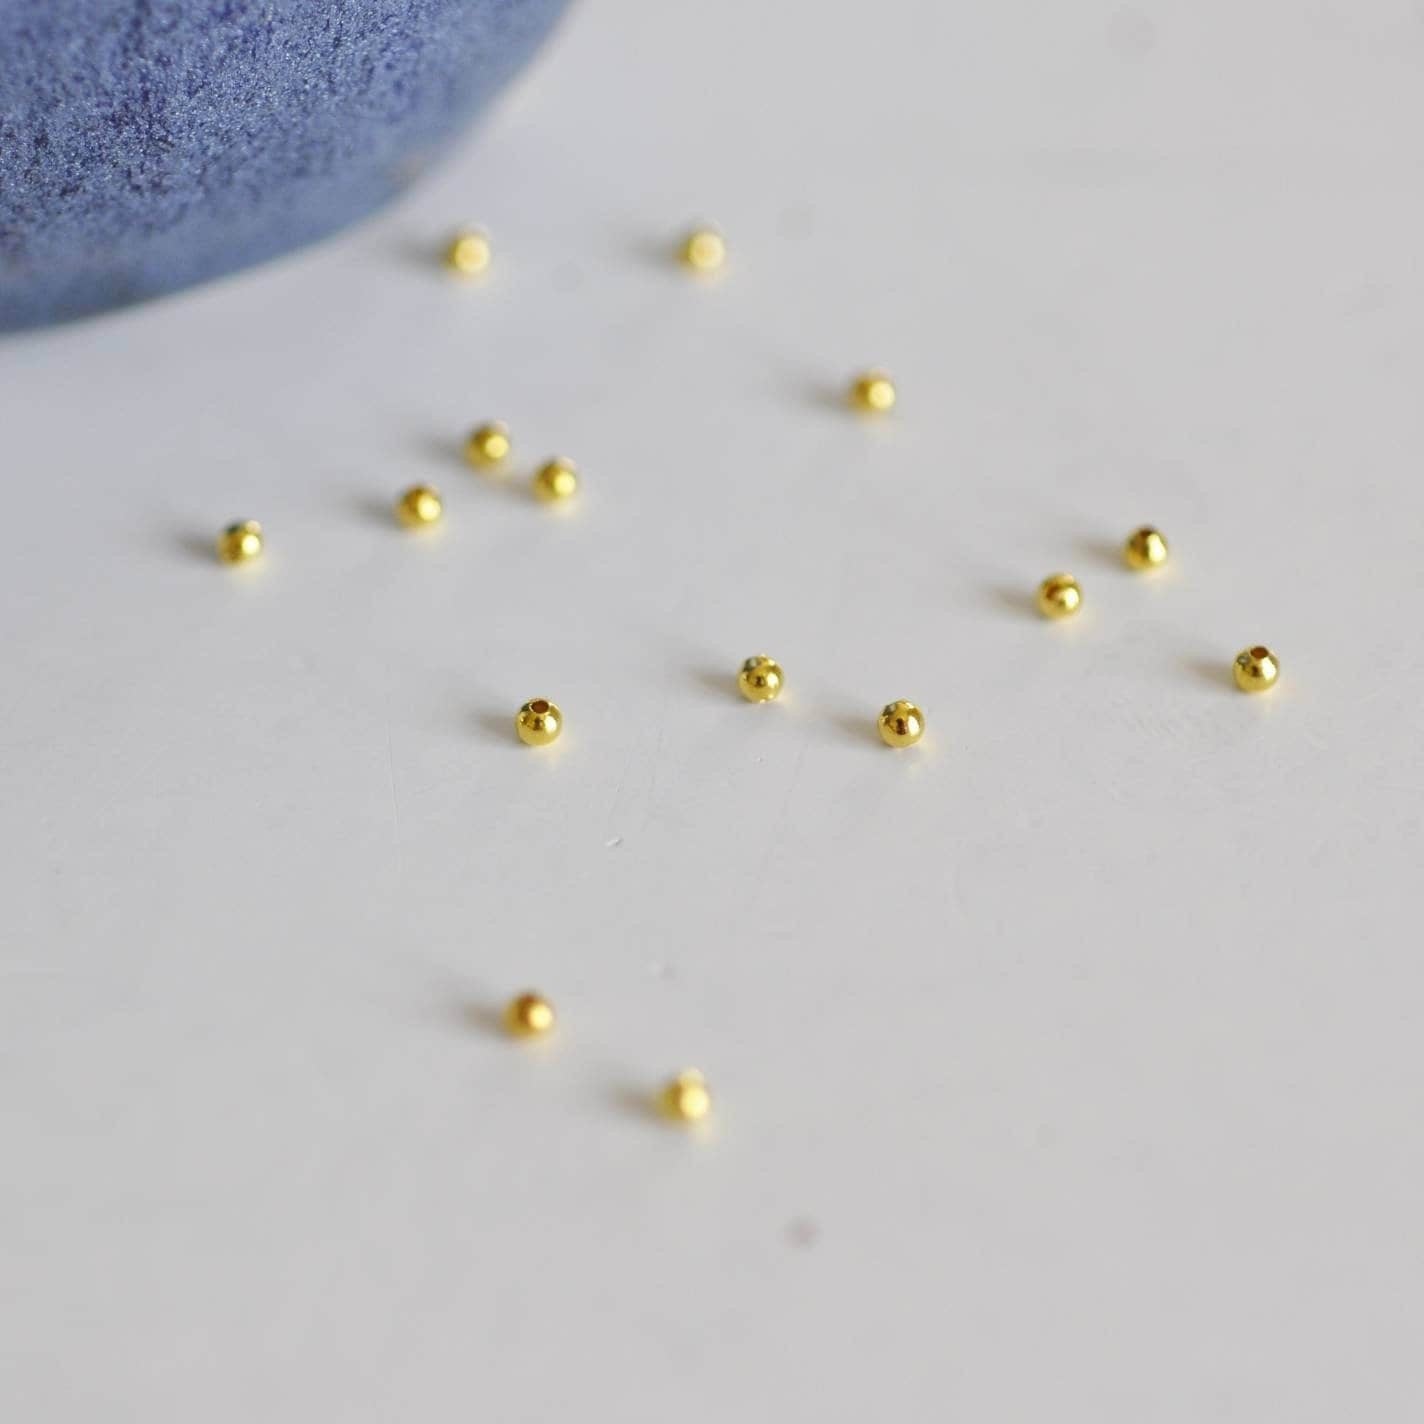 Perles intercallaires Dorées, fournitures créatives, perles intercalaire dorées, création bijoux, 10 grammes, 3mm G294